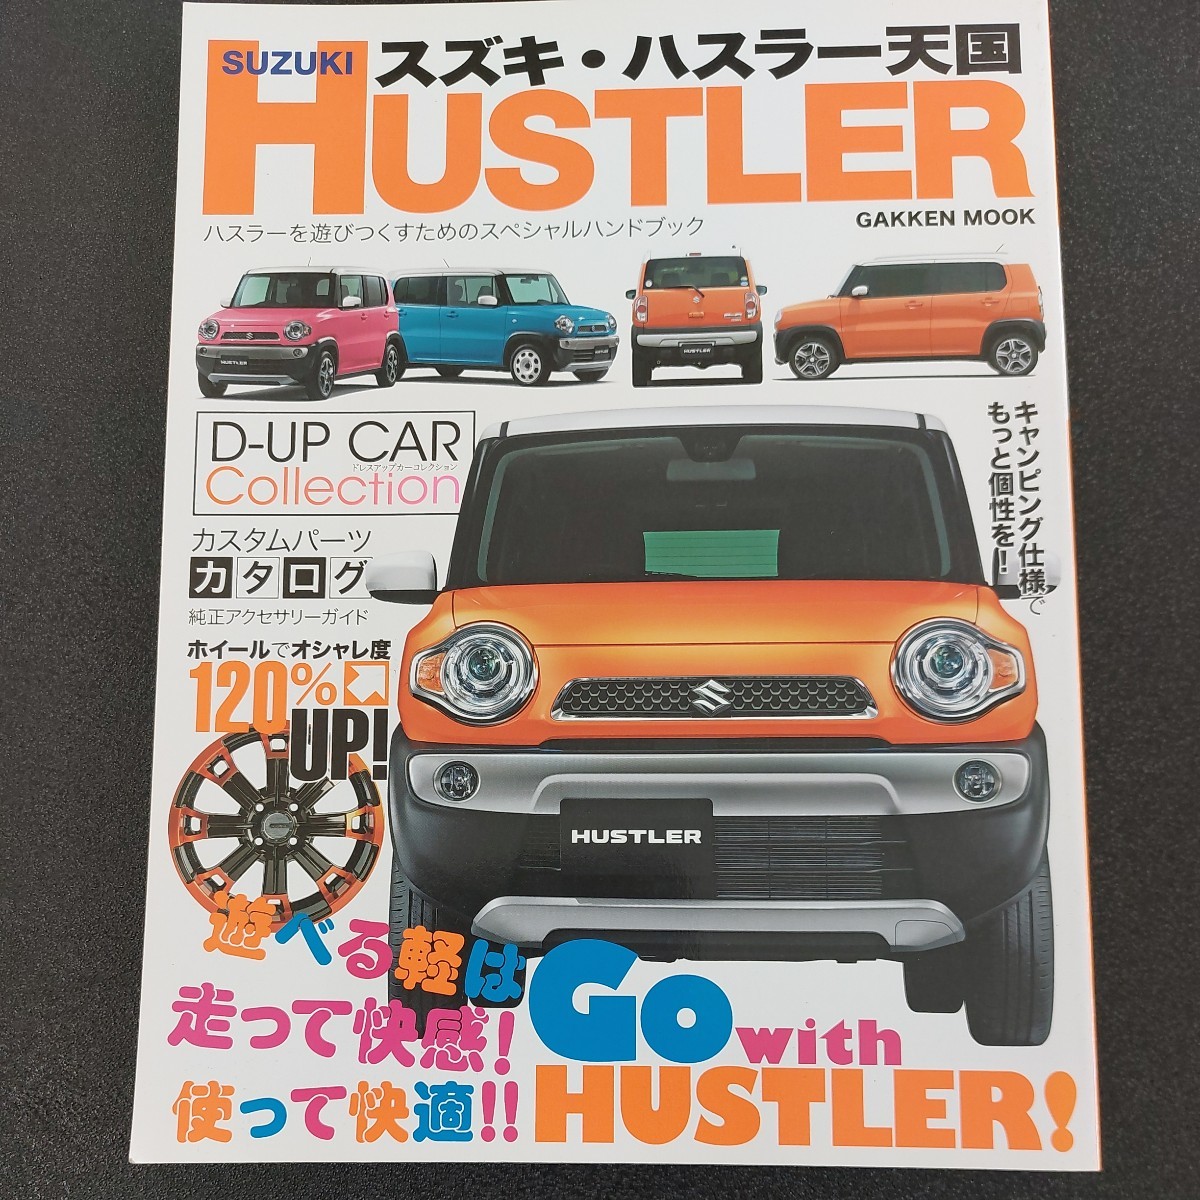 * Suzuki Hustler небо страна Gakken 2015 год 8 месяц *